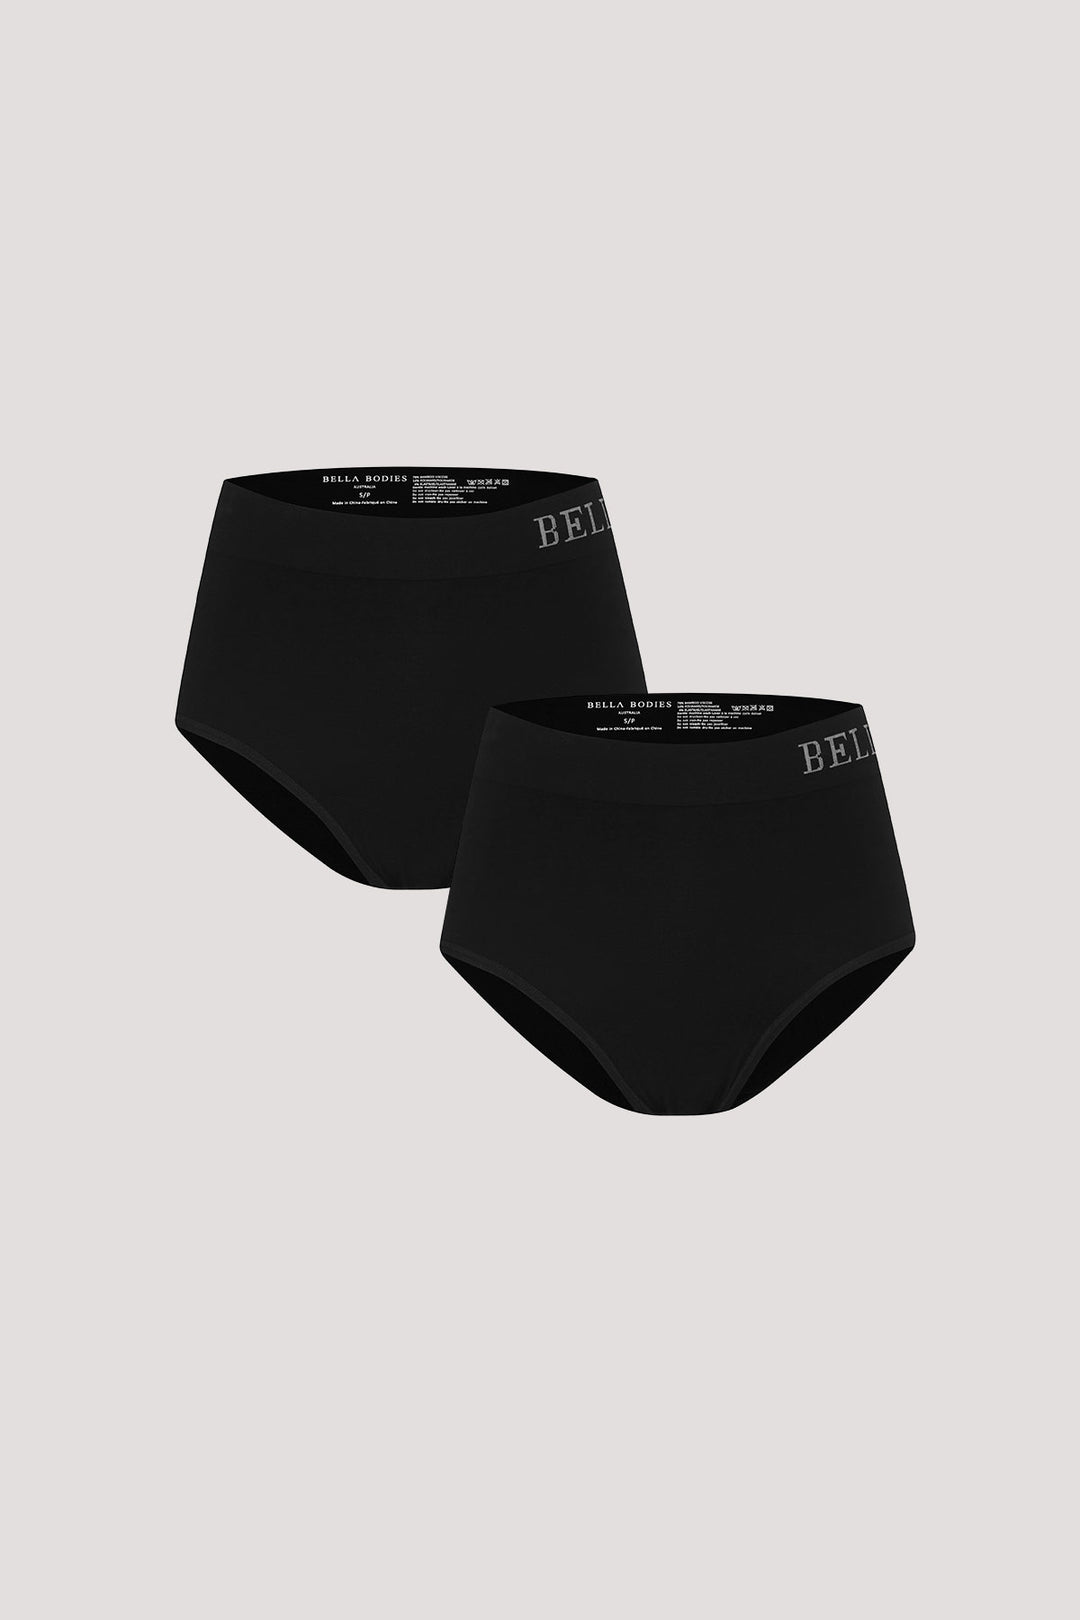 Women's Breathable Bamboo High Waist Underwear 2 pack | Bella Bodies Australia | Black and Black